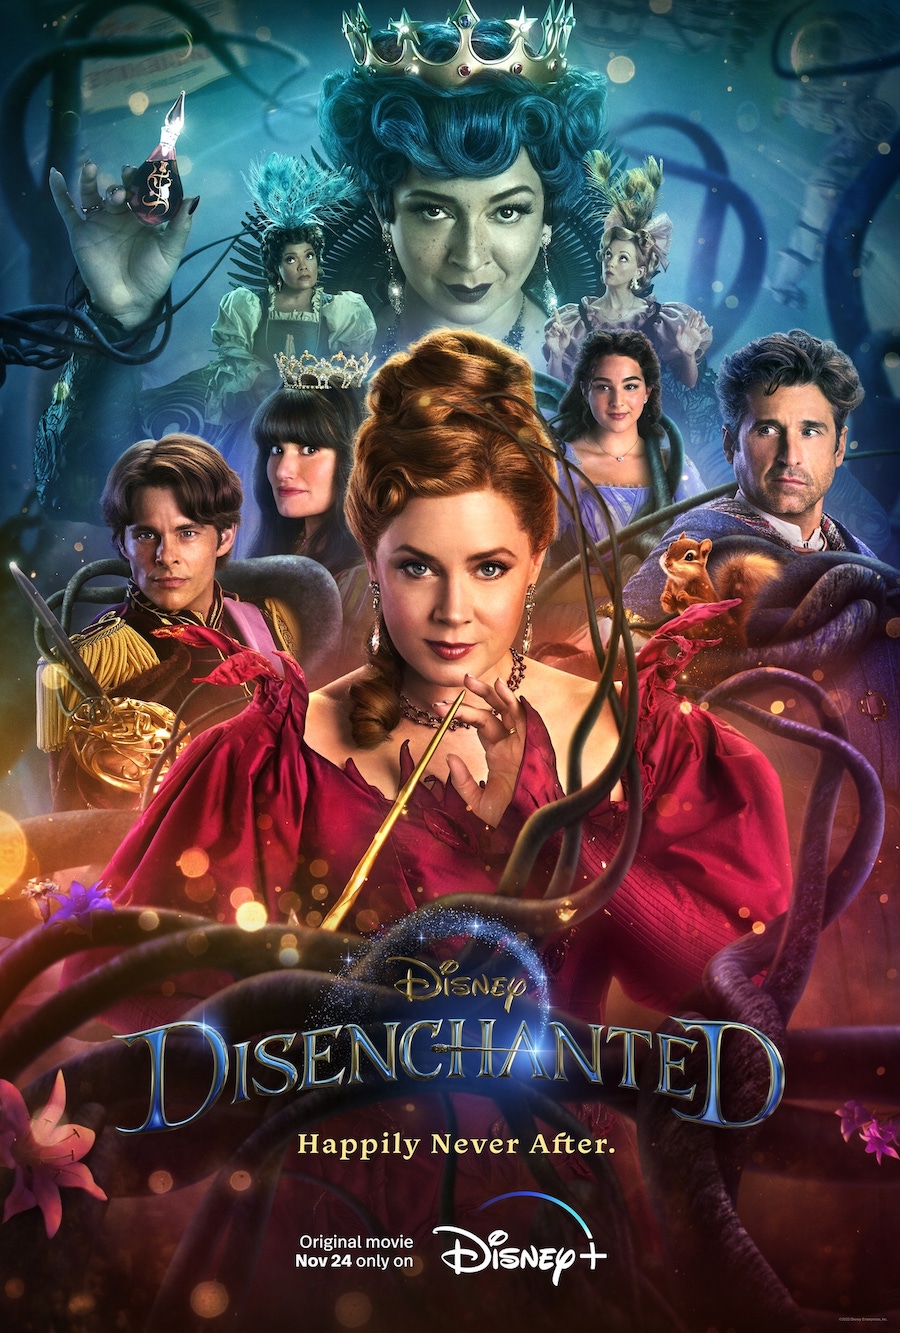 `Disenchanted` image courtesy of Disney Media & Entertainment Distribution.